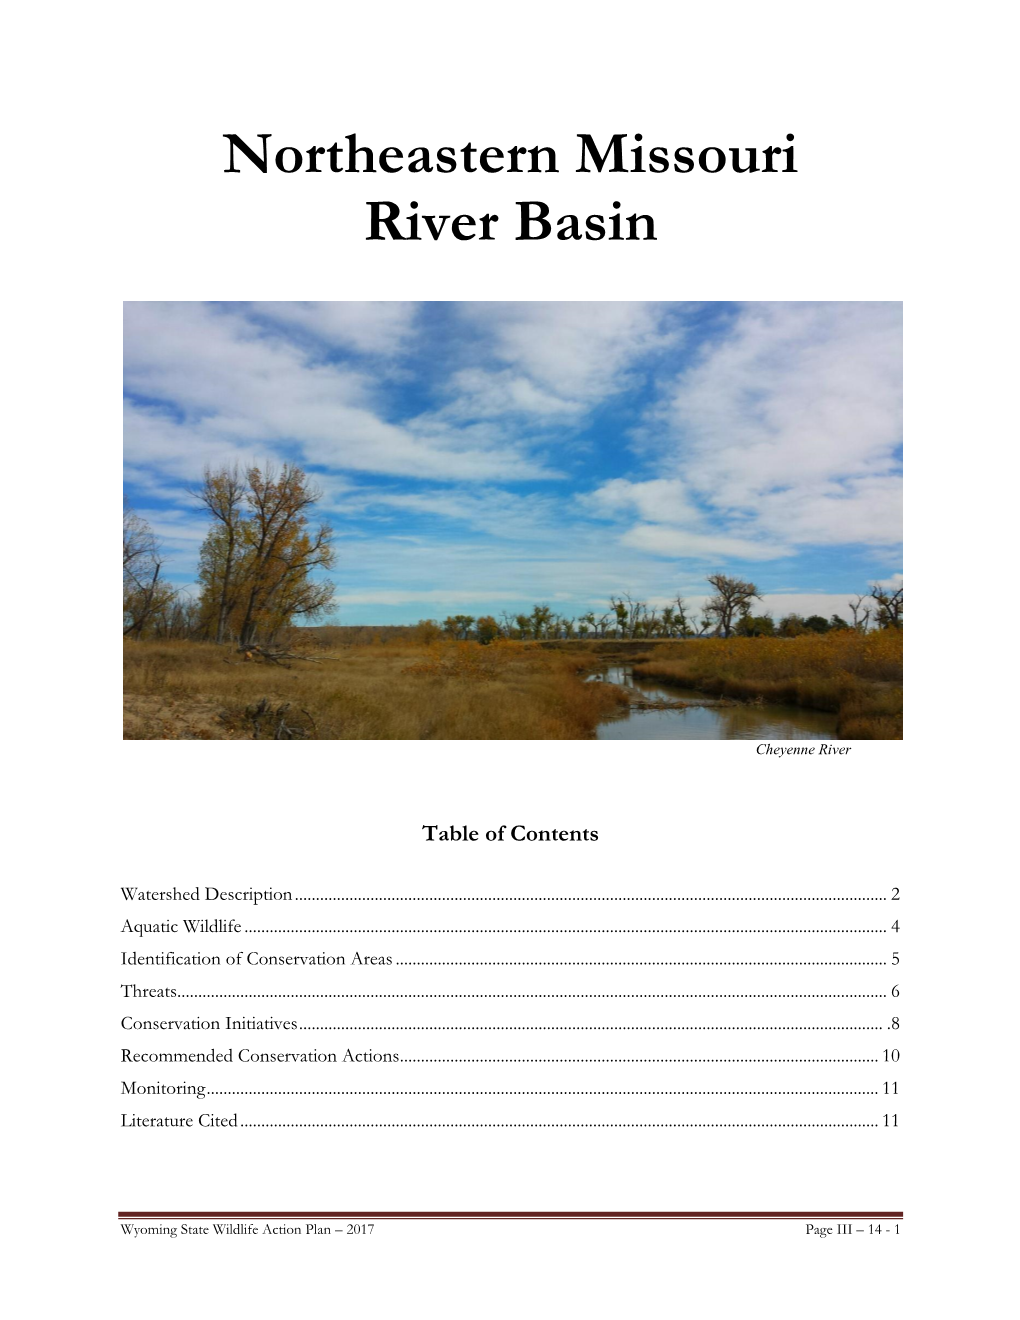 Northeastern Missouri River Basin